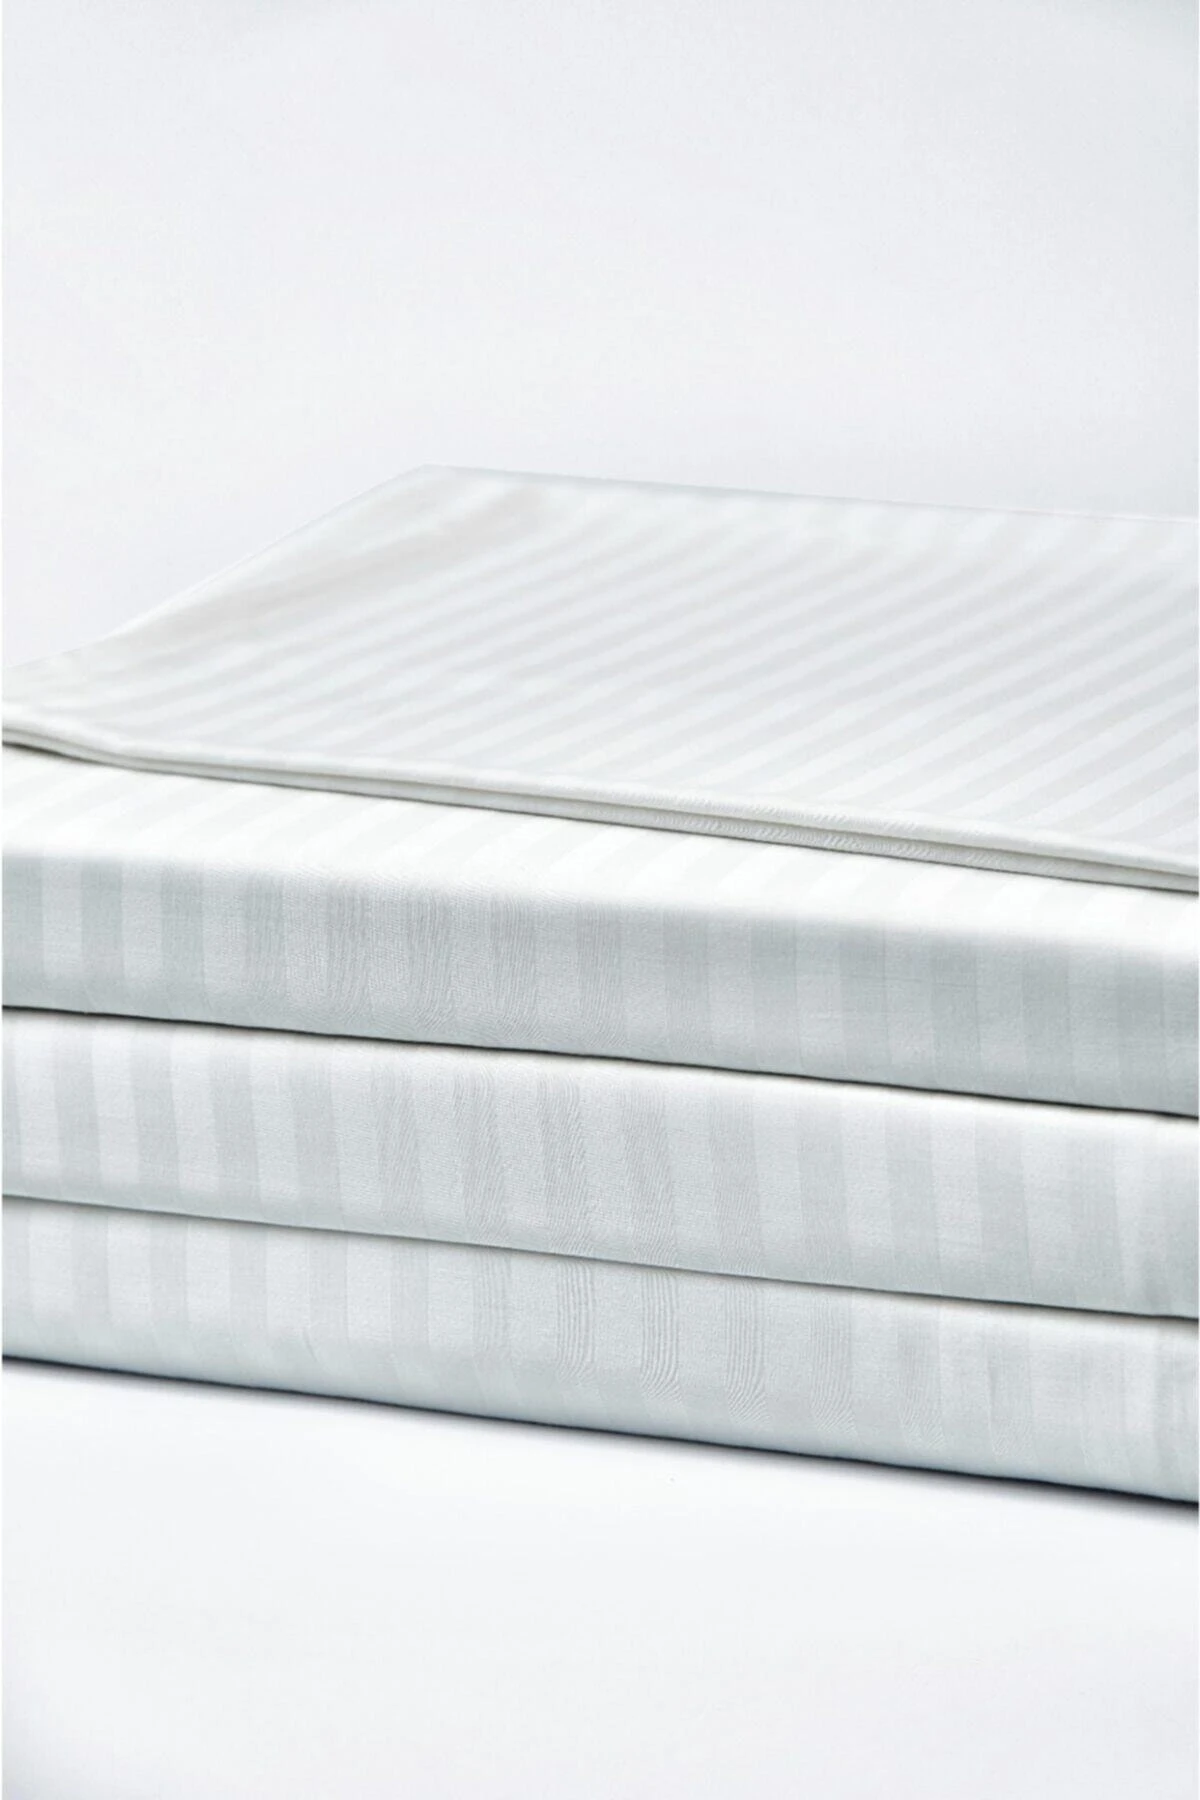 Sábanas blancas satinado rayas cama doble, 160x200, algodón|Hoja| - AliExpress